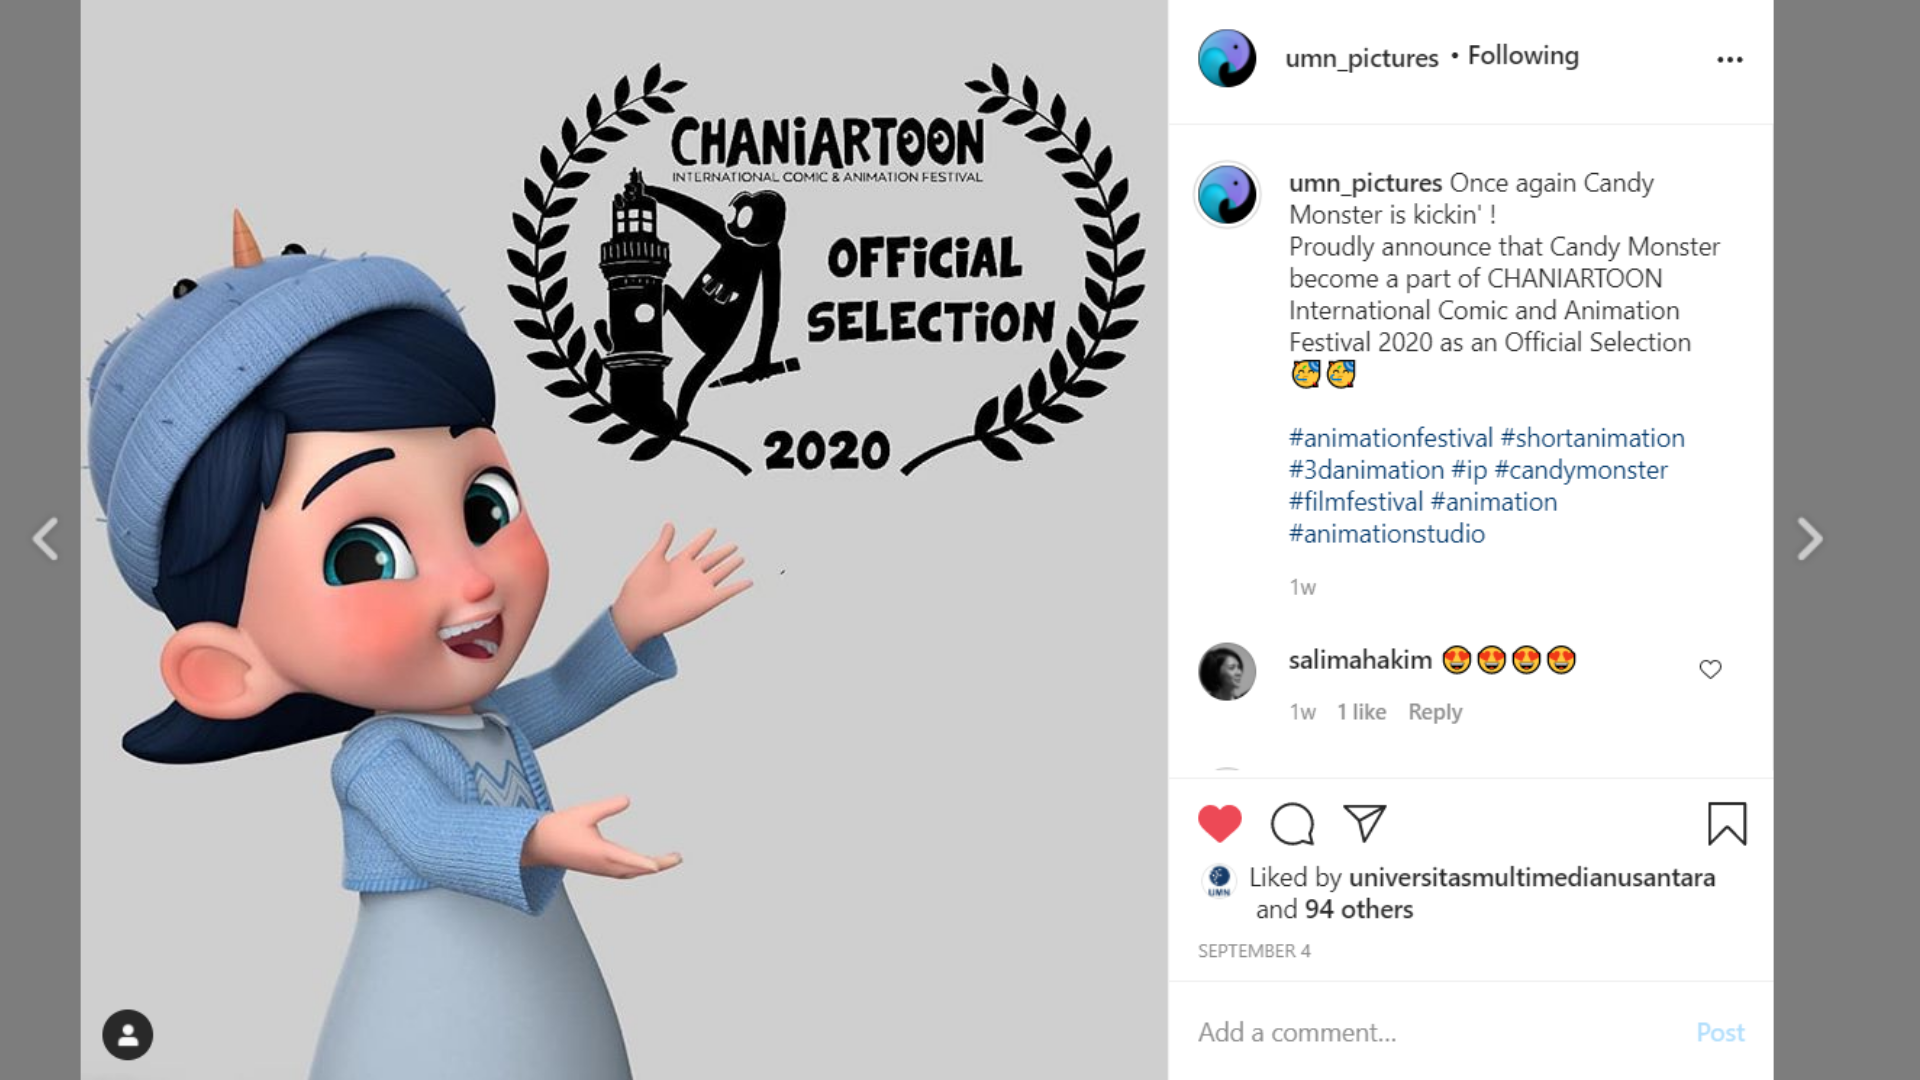 Candy Monster Karya UMN Pictures Tembus Kancah Internasional Lewat CHANIARTOON International Comic and Animation Festival 2020